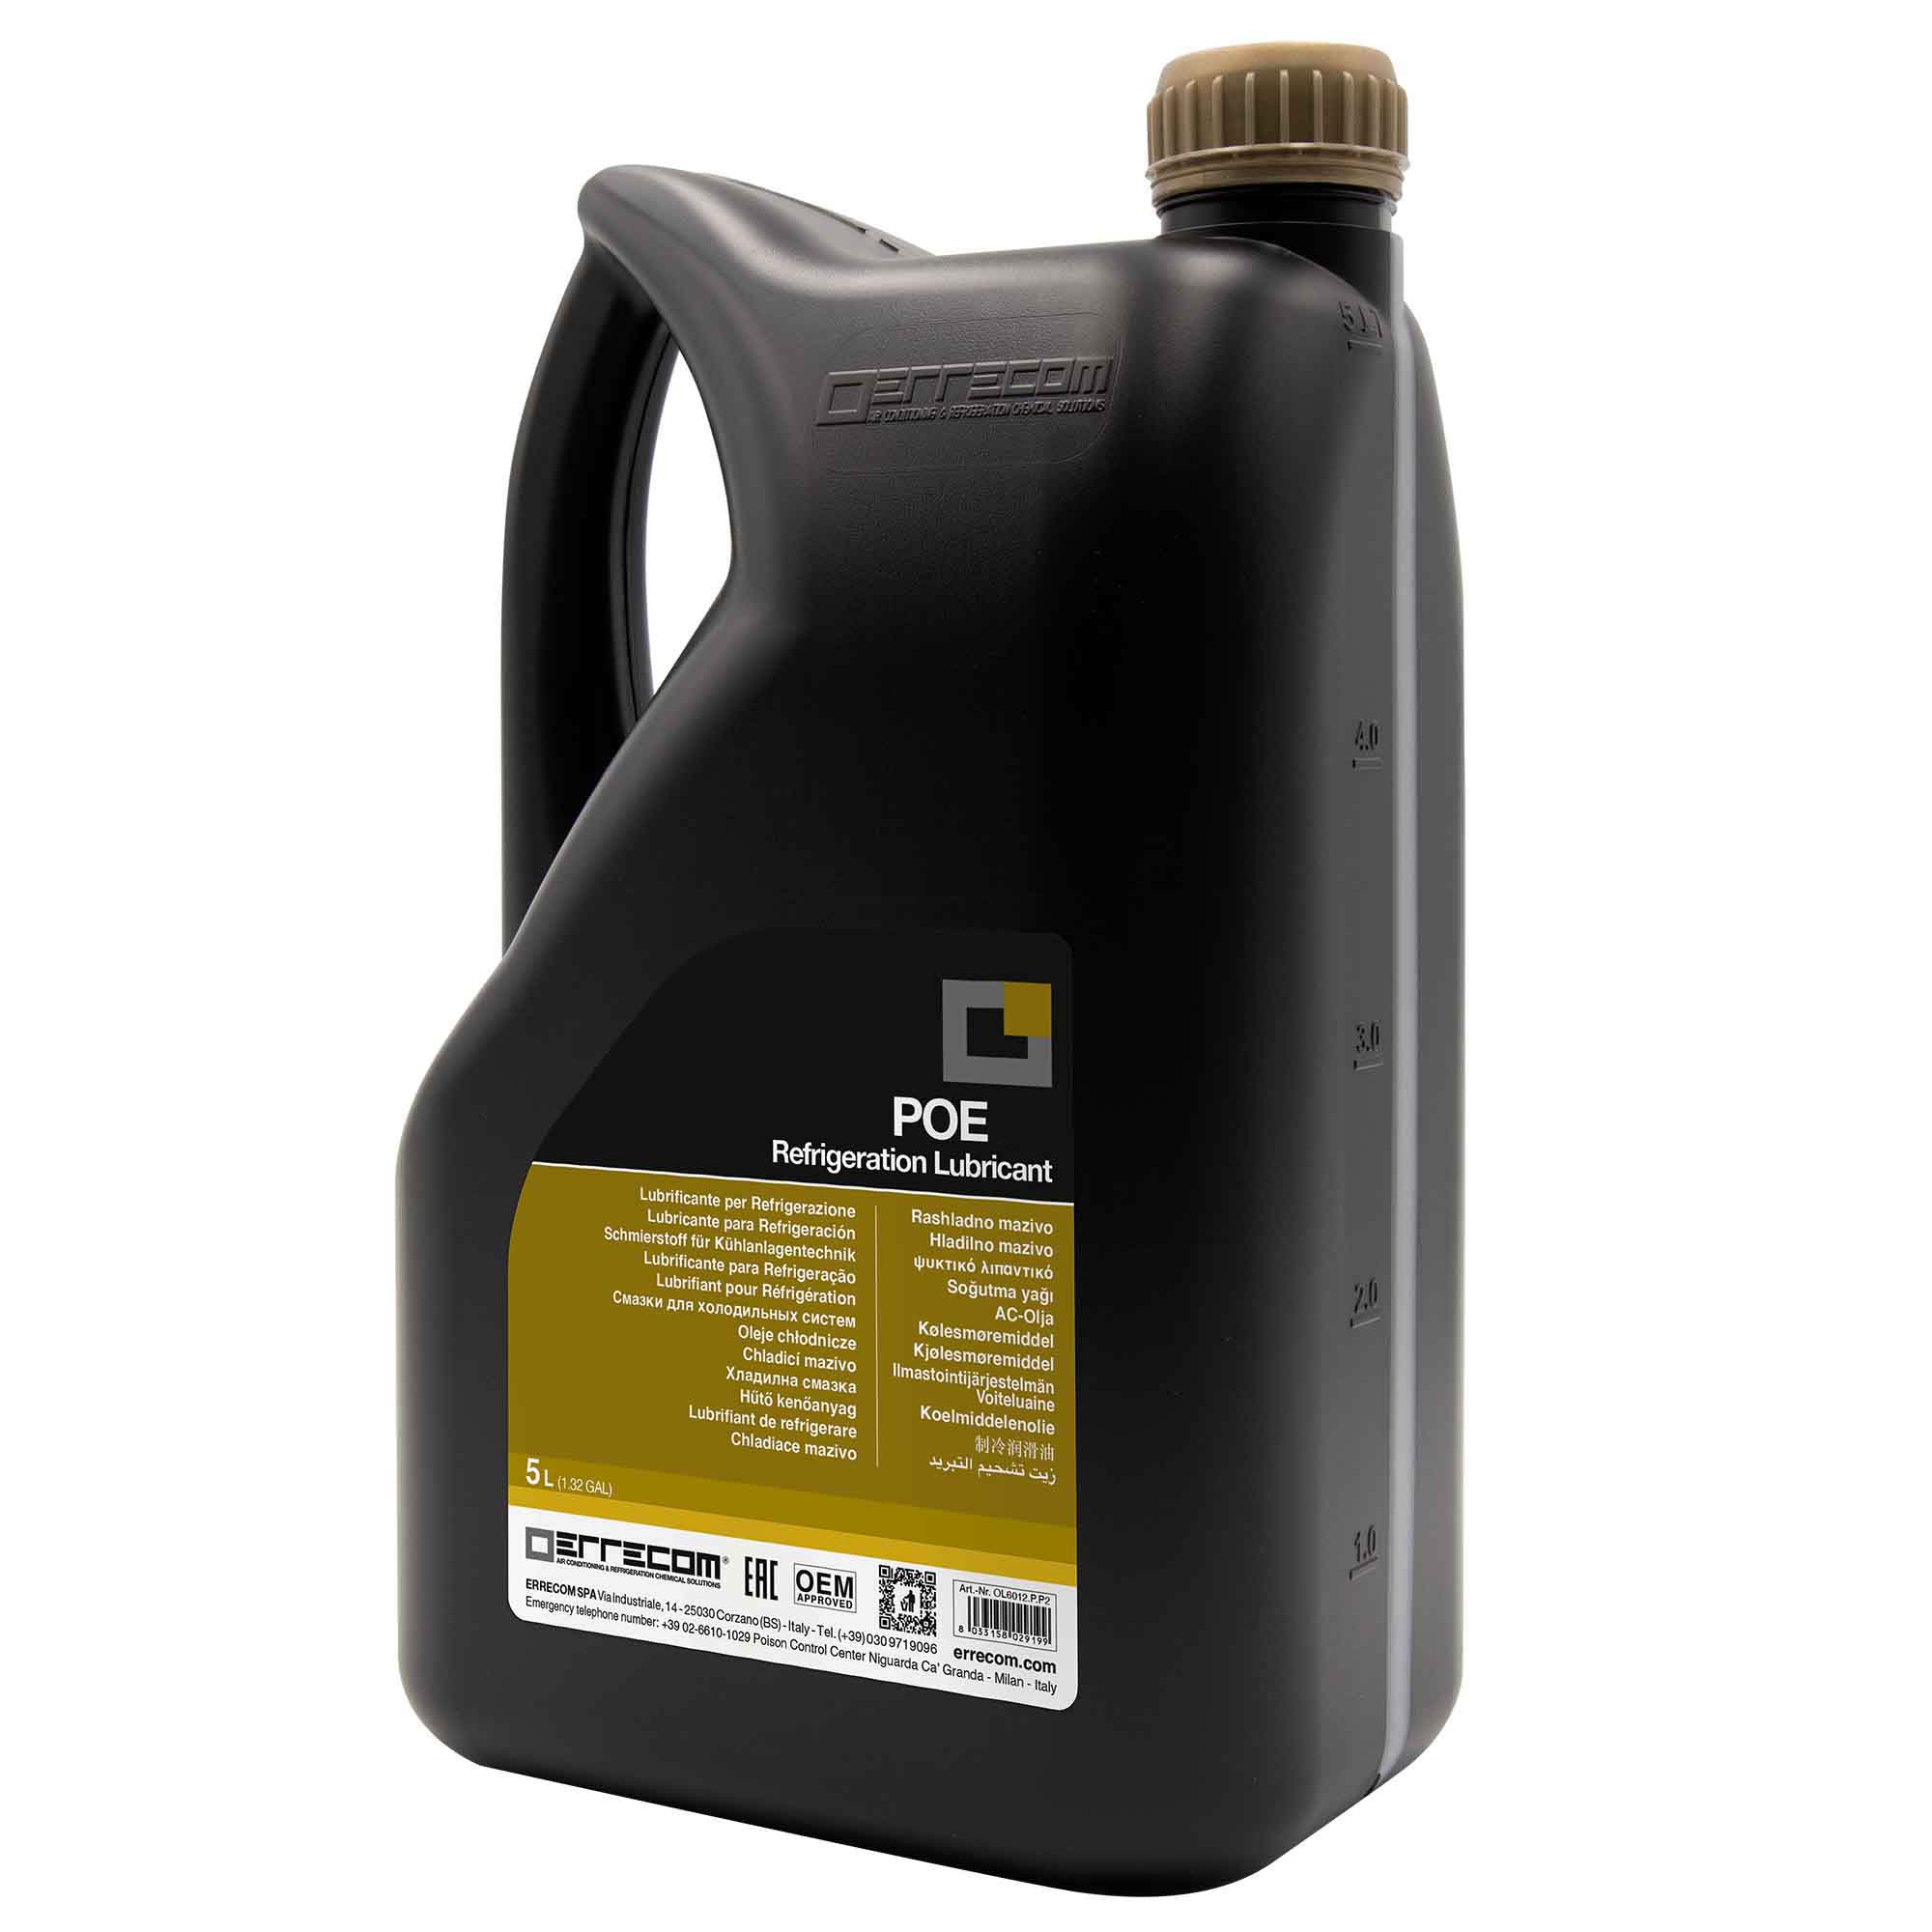 2 x R&AC Polyol Ester (POE) lubricant oil Errecom 100 - Plastic Tank 5 lt. - Package # 2 pcs. (total 10 liters)